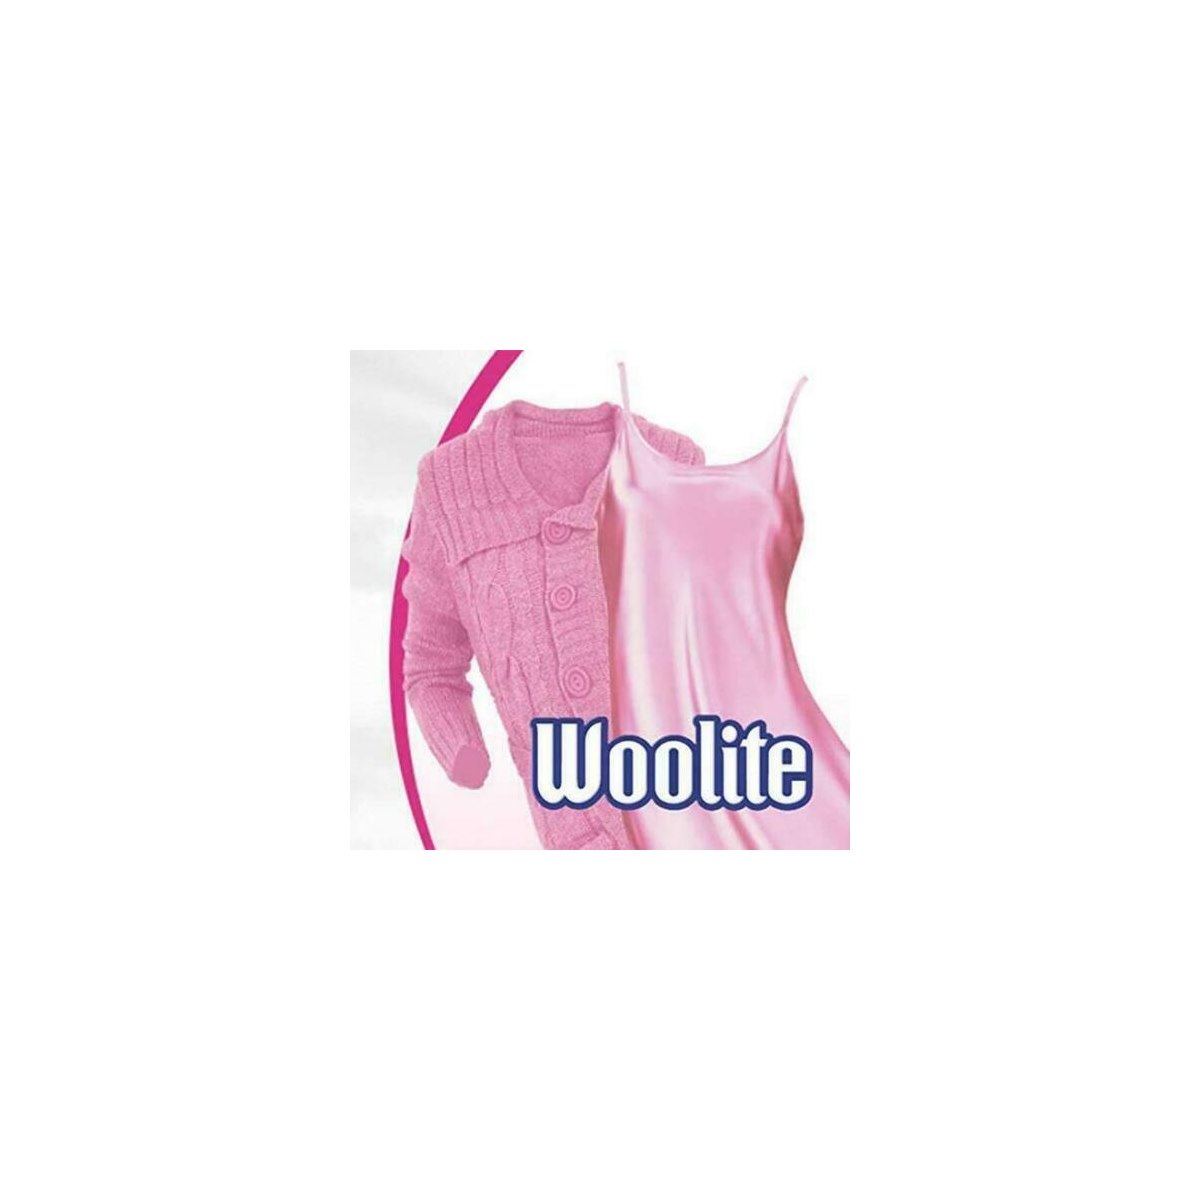 Woolite Laundry Liquids